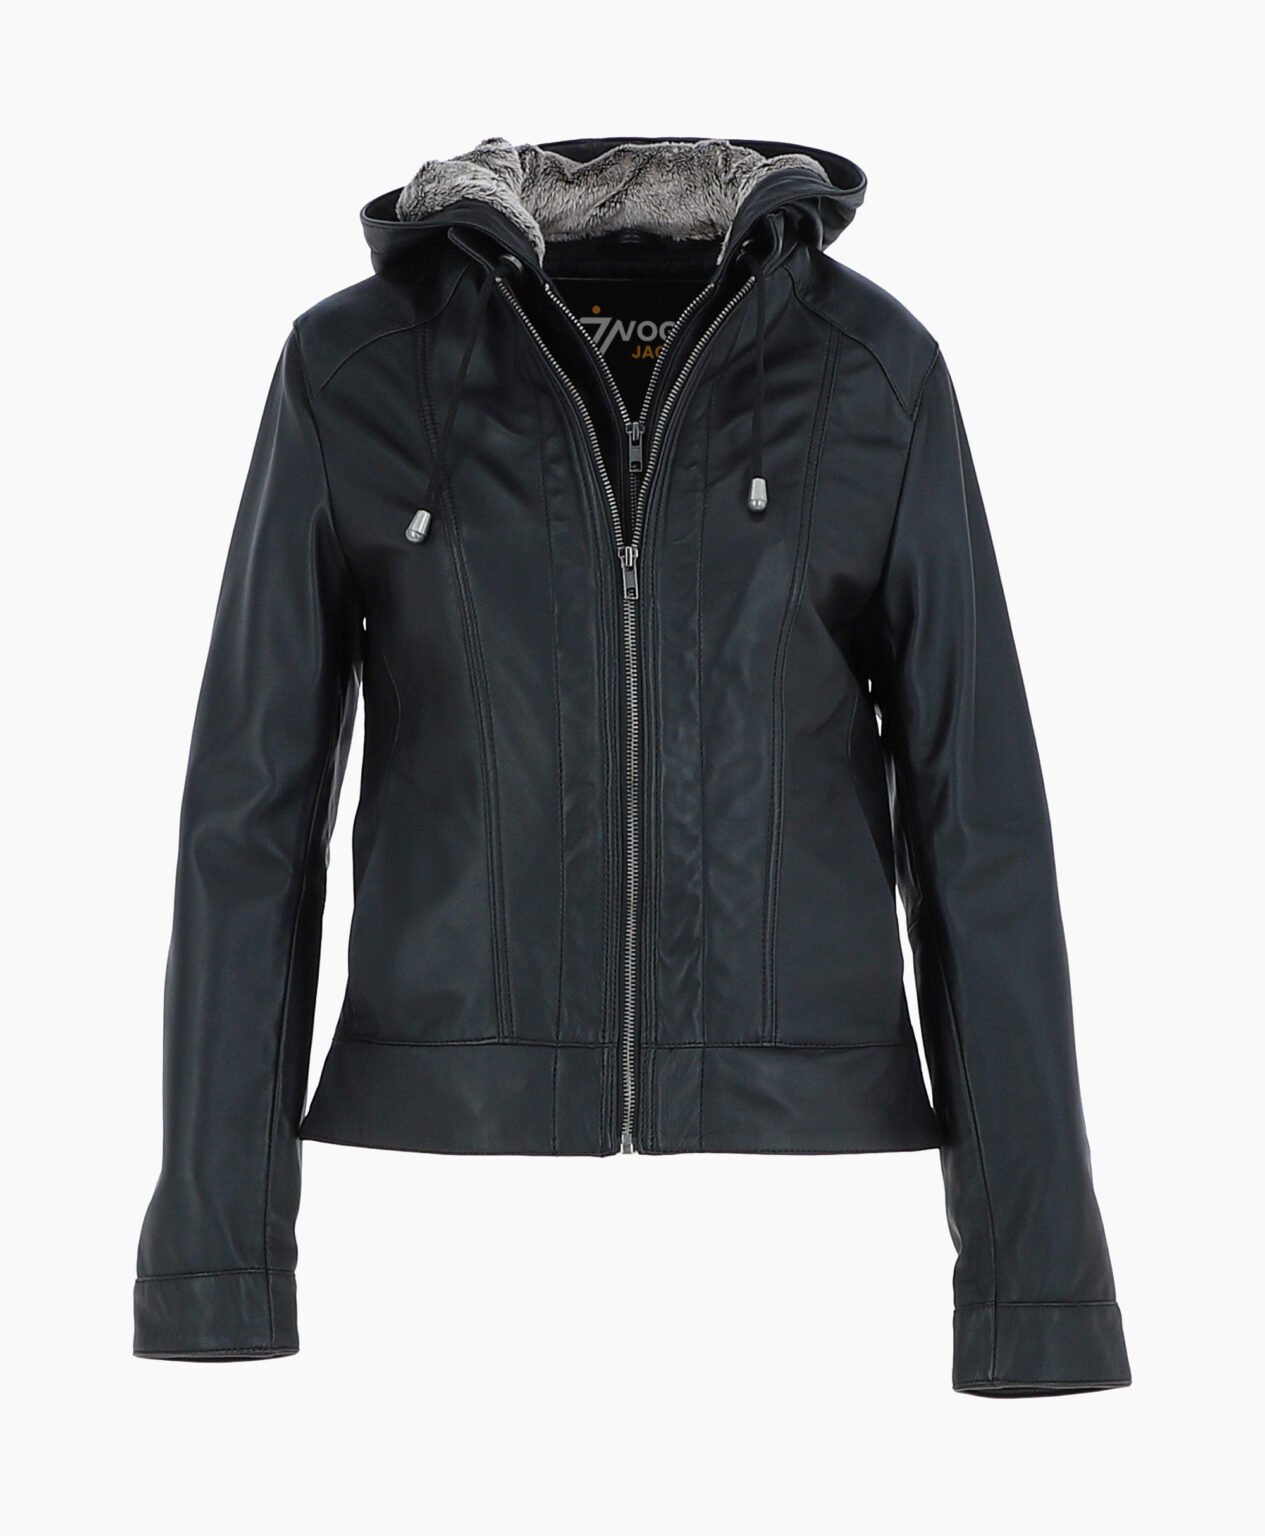 vogue-jacket-leather-hooded-jacket-black-sarasota-image200